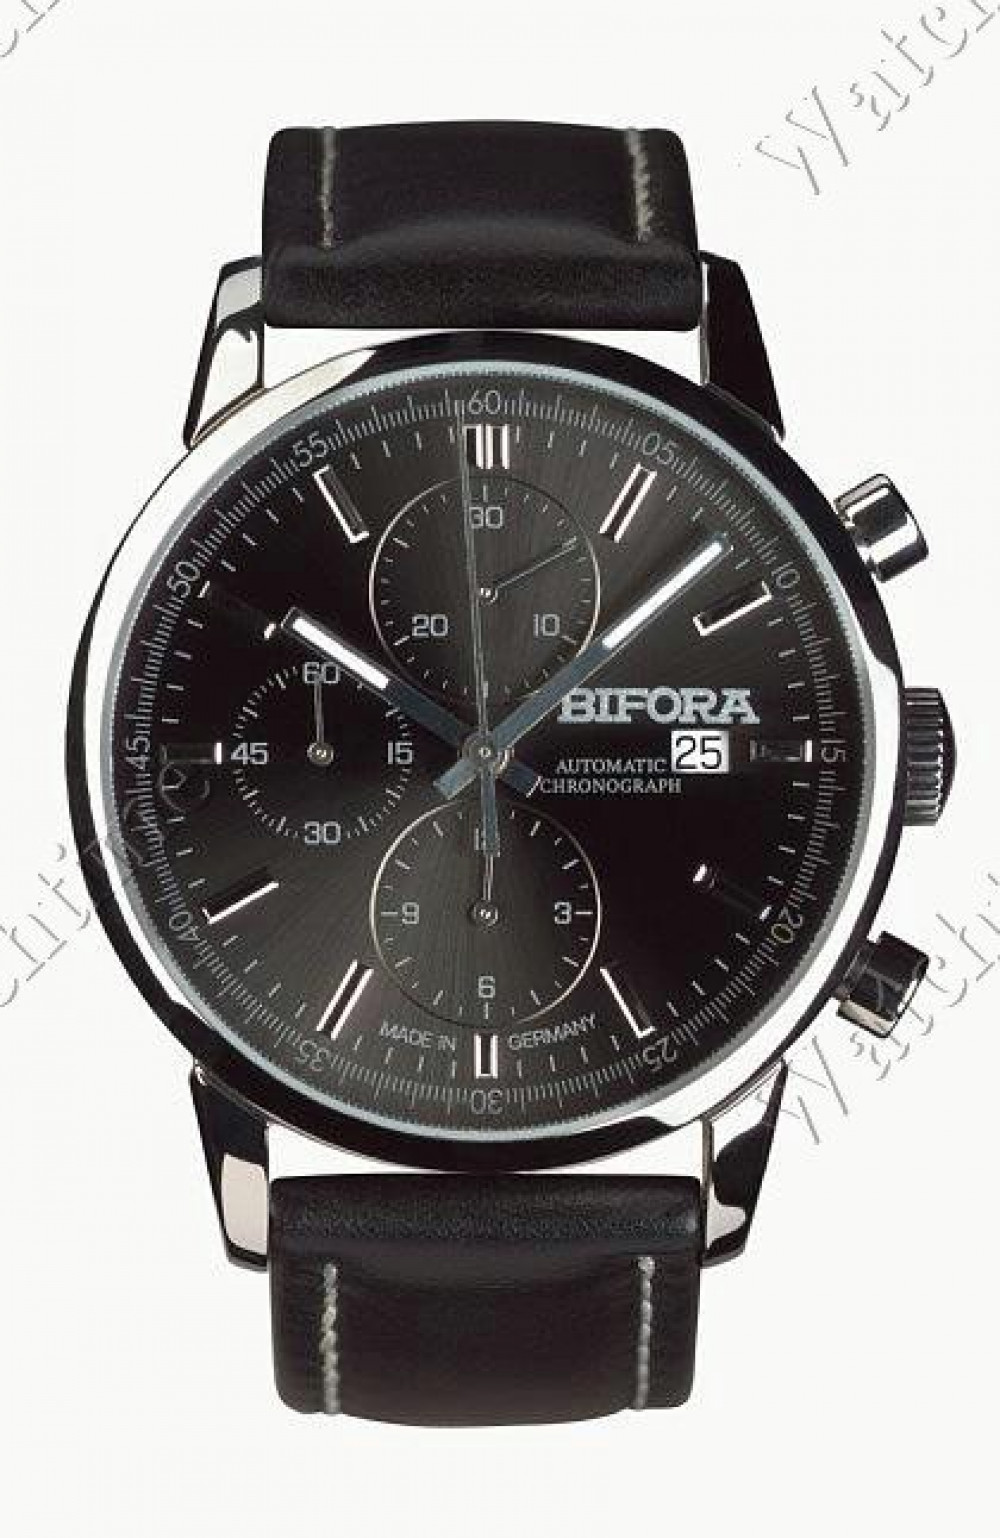 Zegarek firmy Bifora, model Chrono 2955018